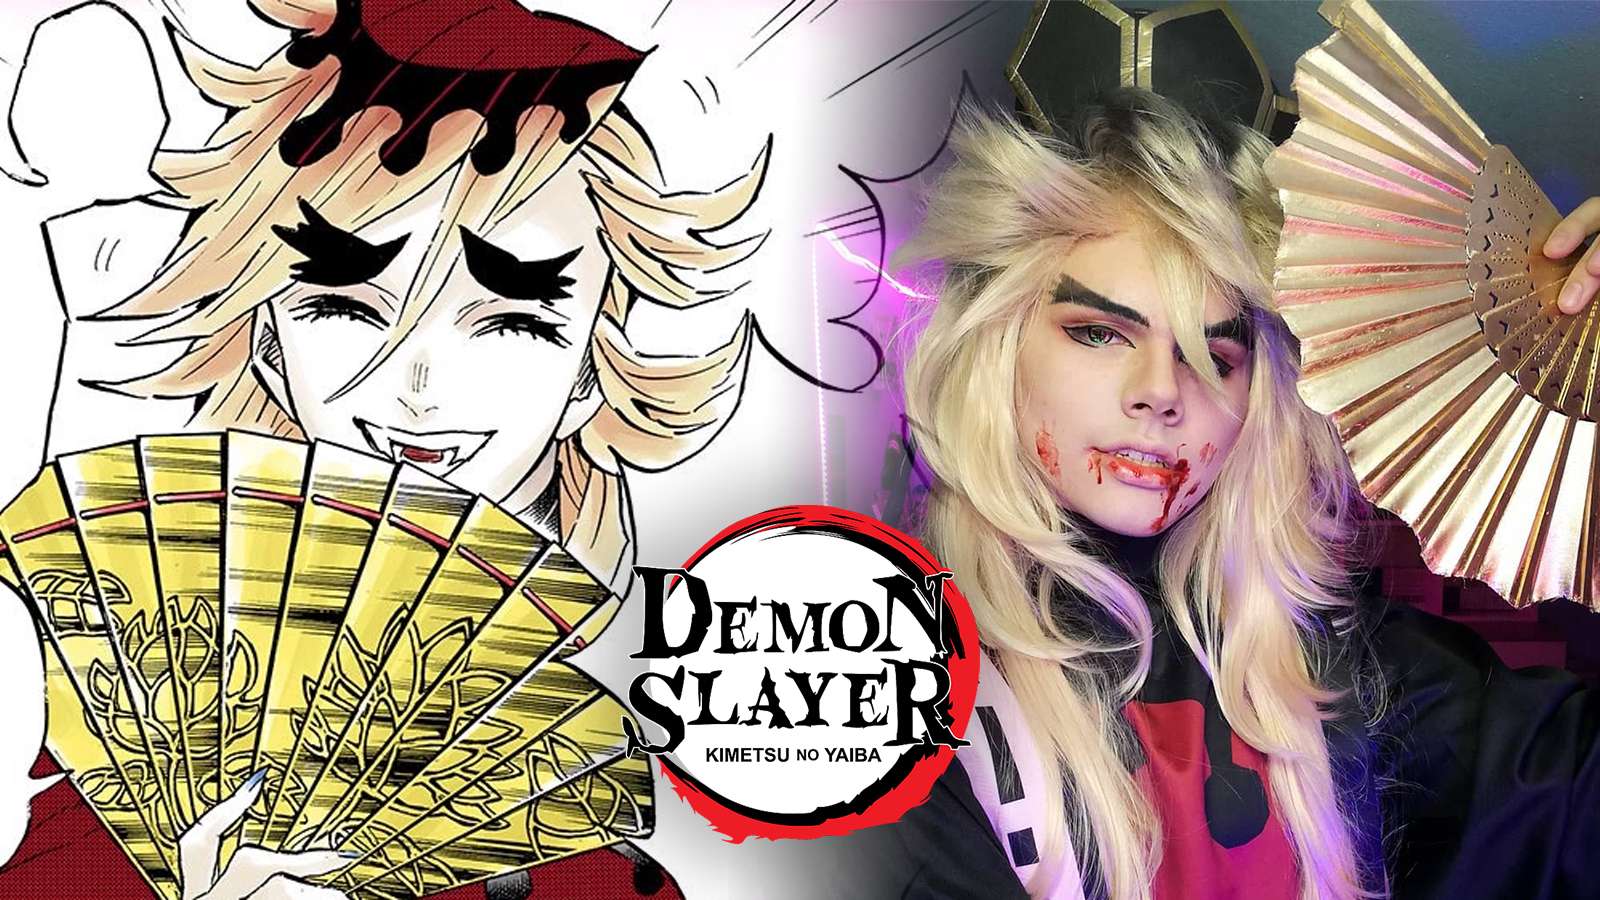 Doma cosplay for Demon Slayer